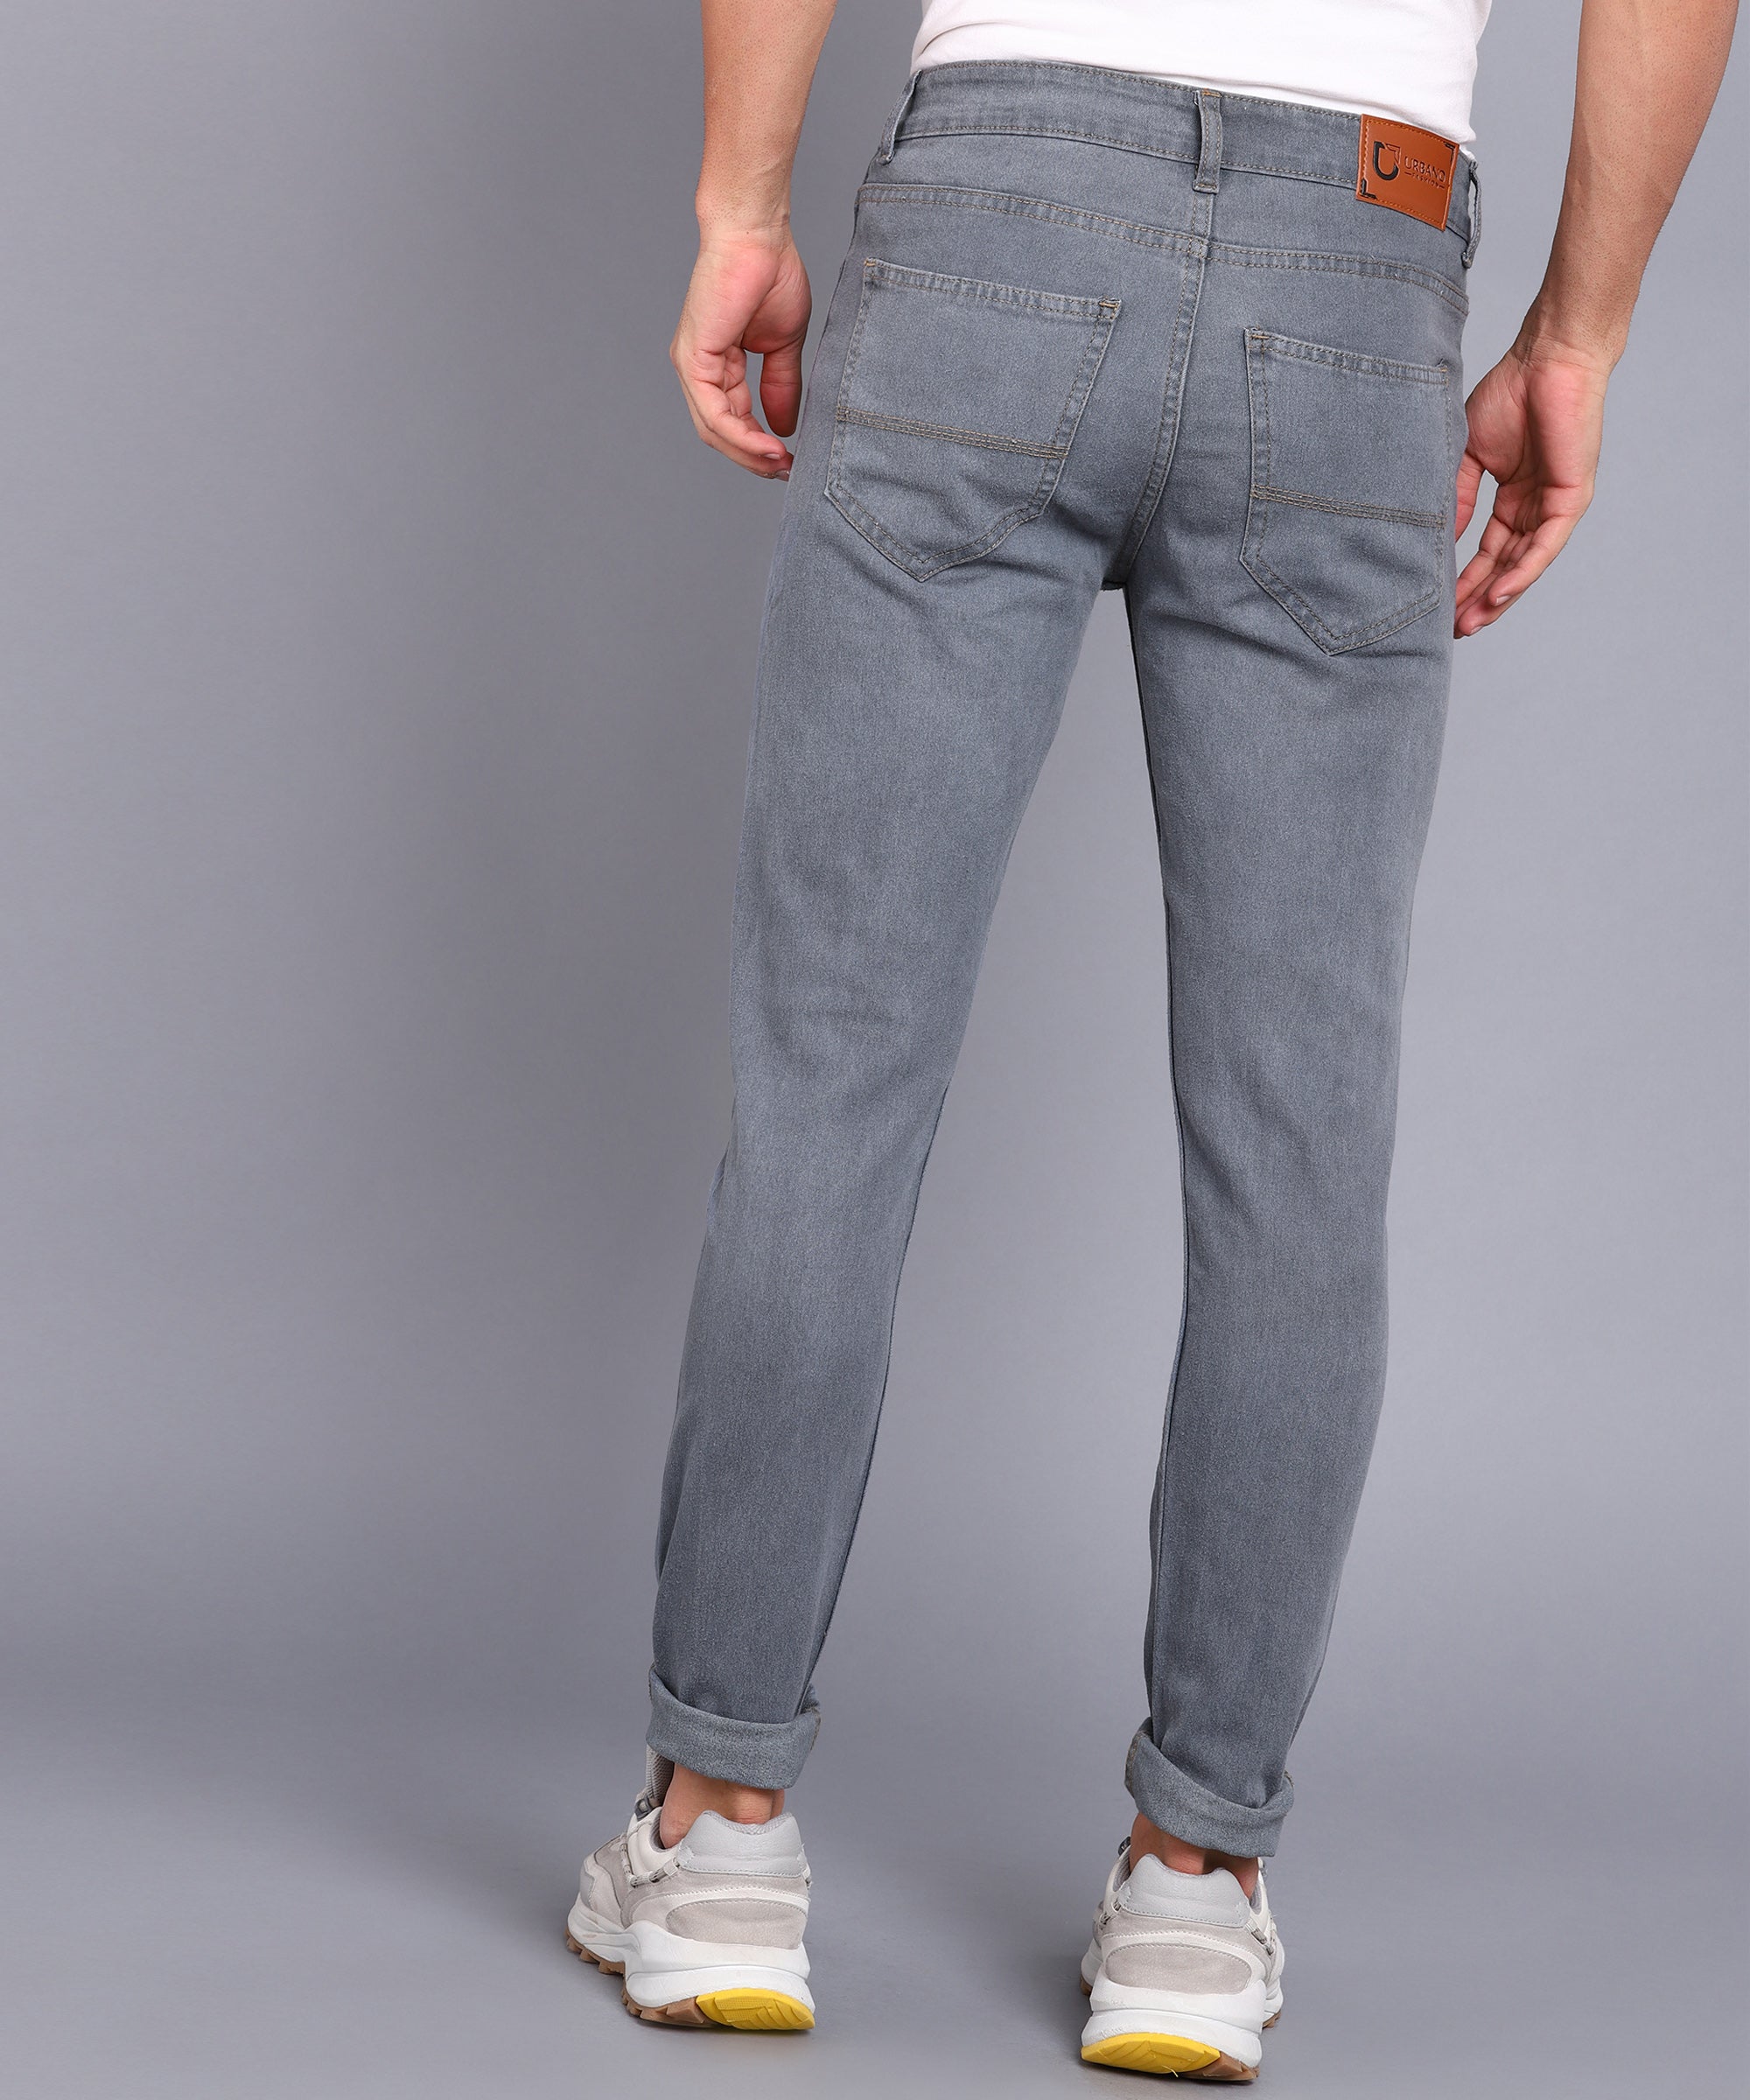 Men's Light Grey Slim Fit Stretchable Jeans